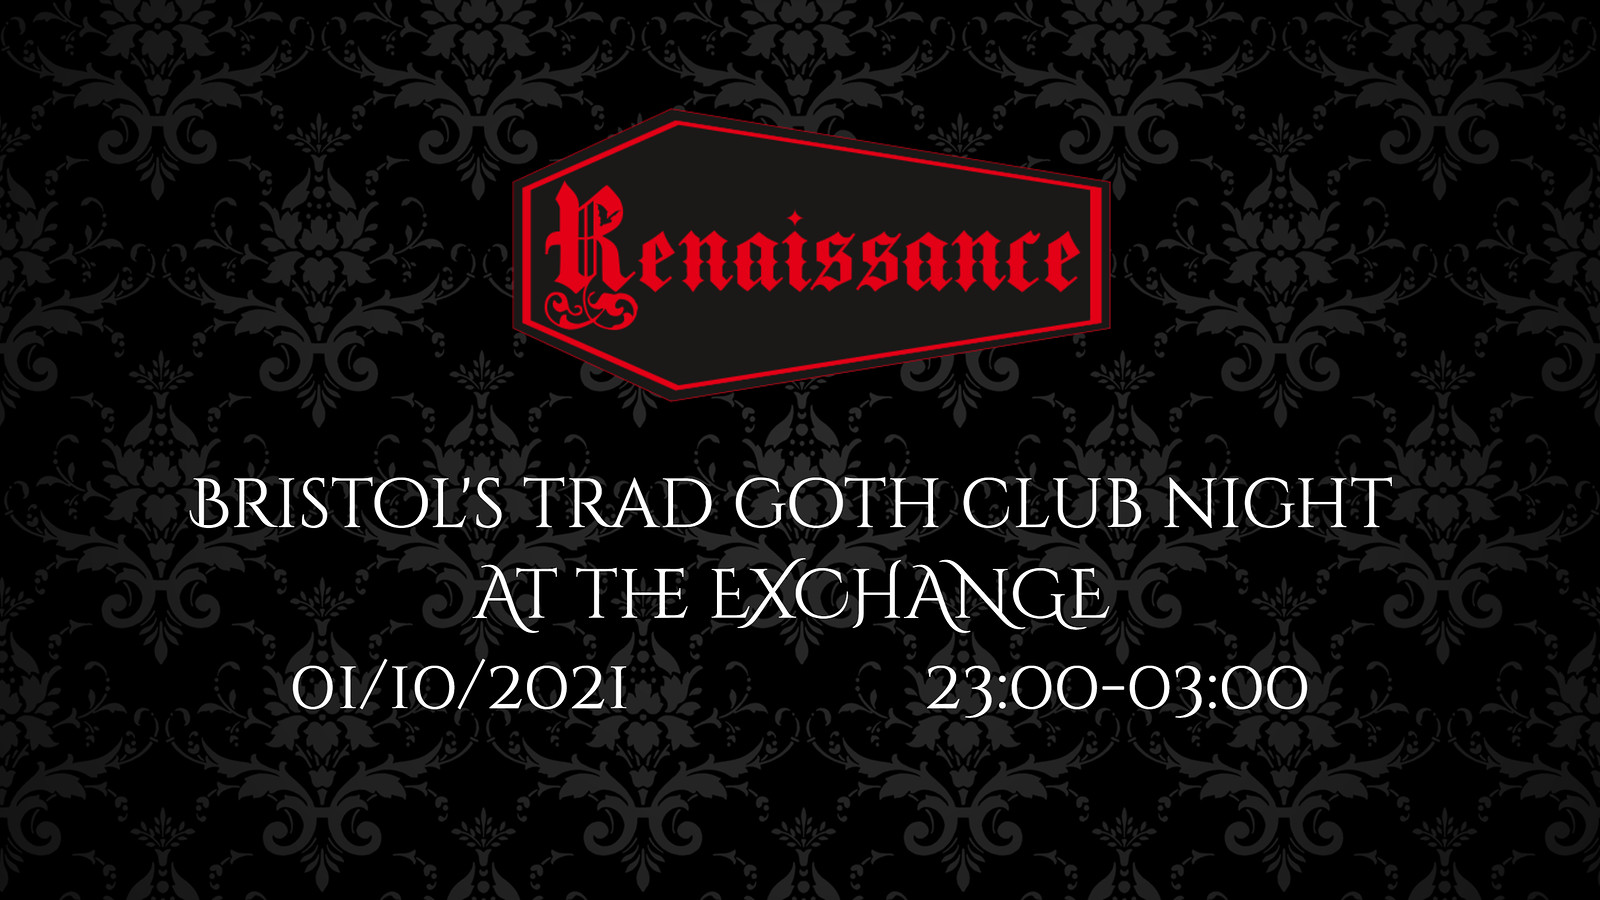 Renaissance - Bristol’s Trad Goth Club Night at Exchange